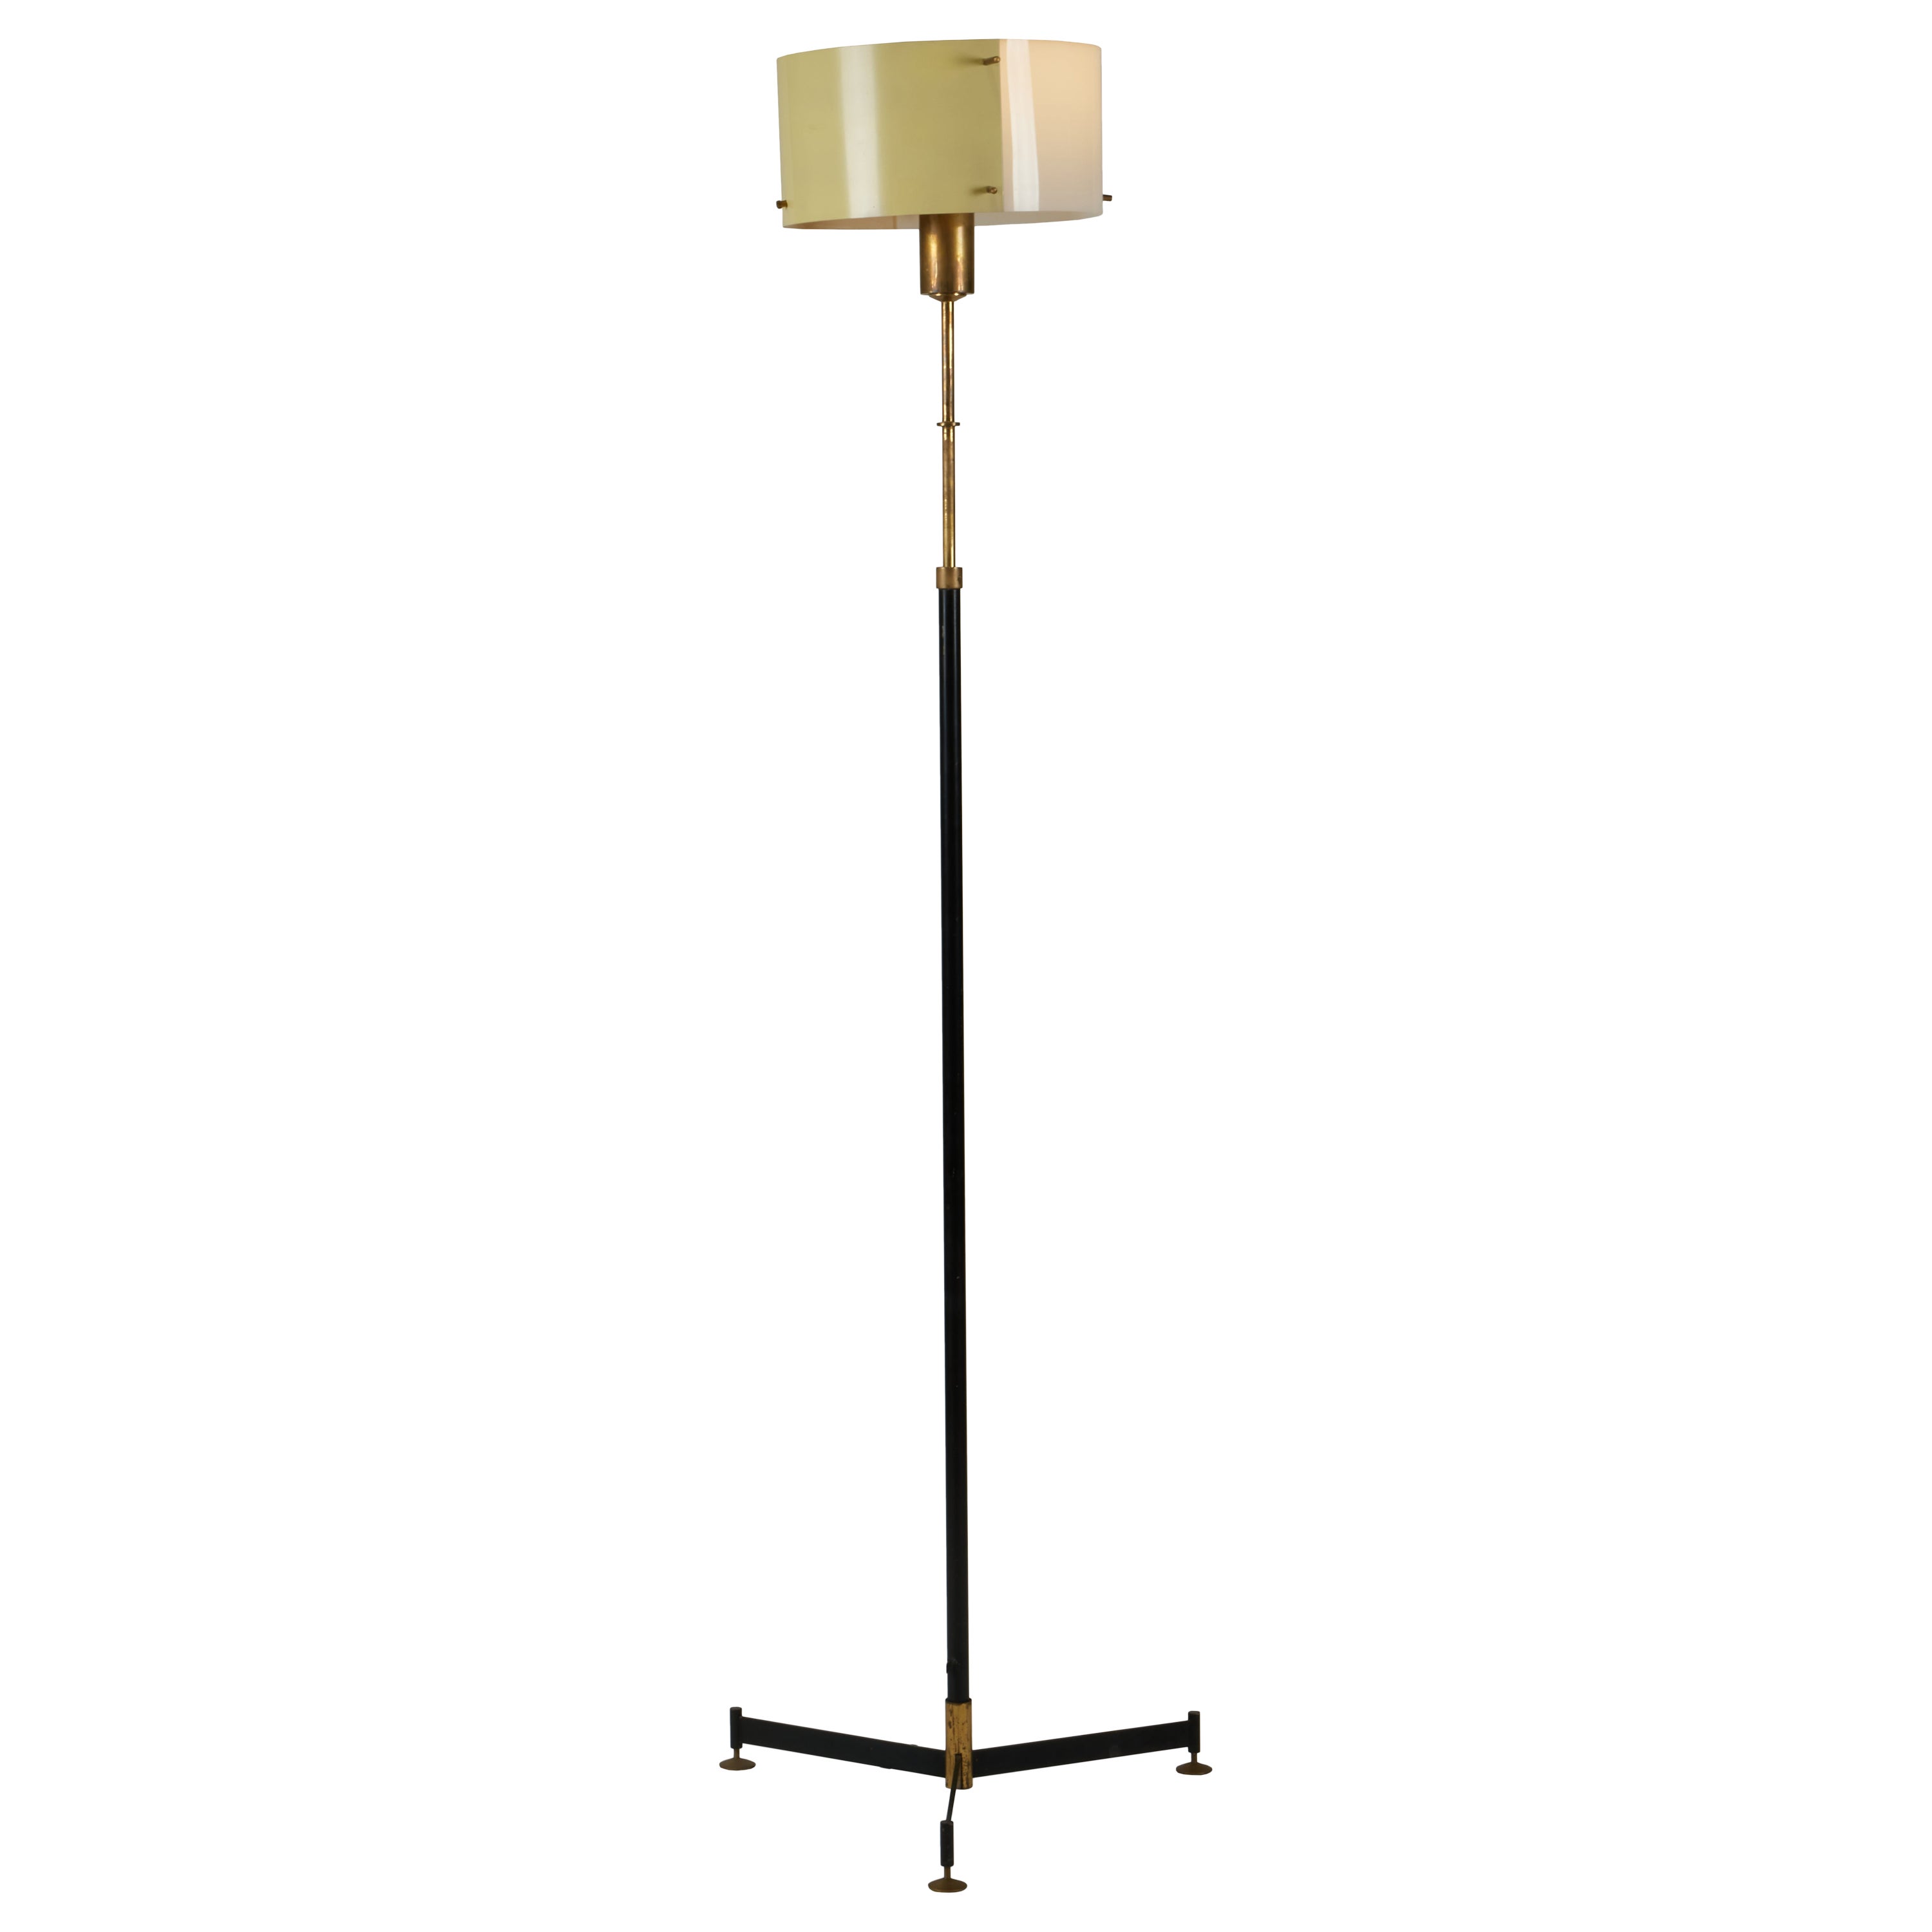 Italian Mid-Century, Modern Floor Lamp with Adjustable Height by Stilnovo, 1950s For Sale